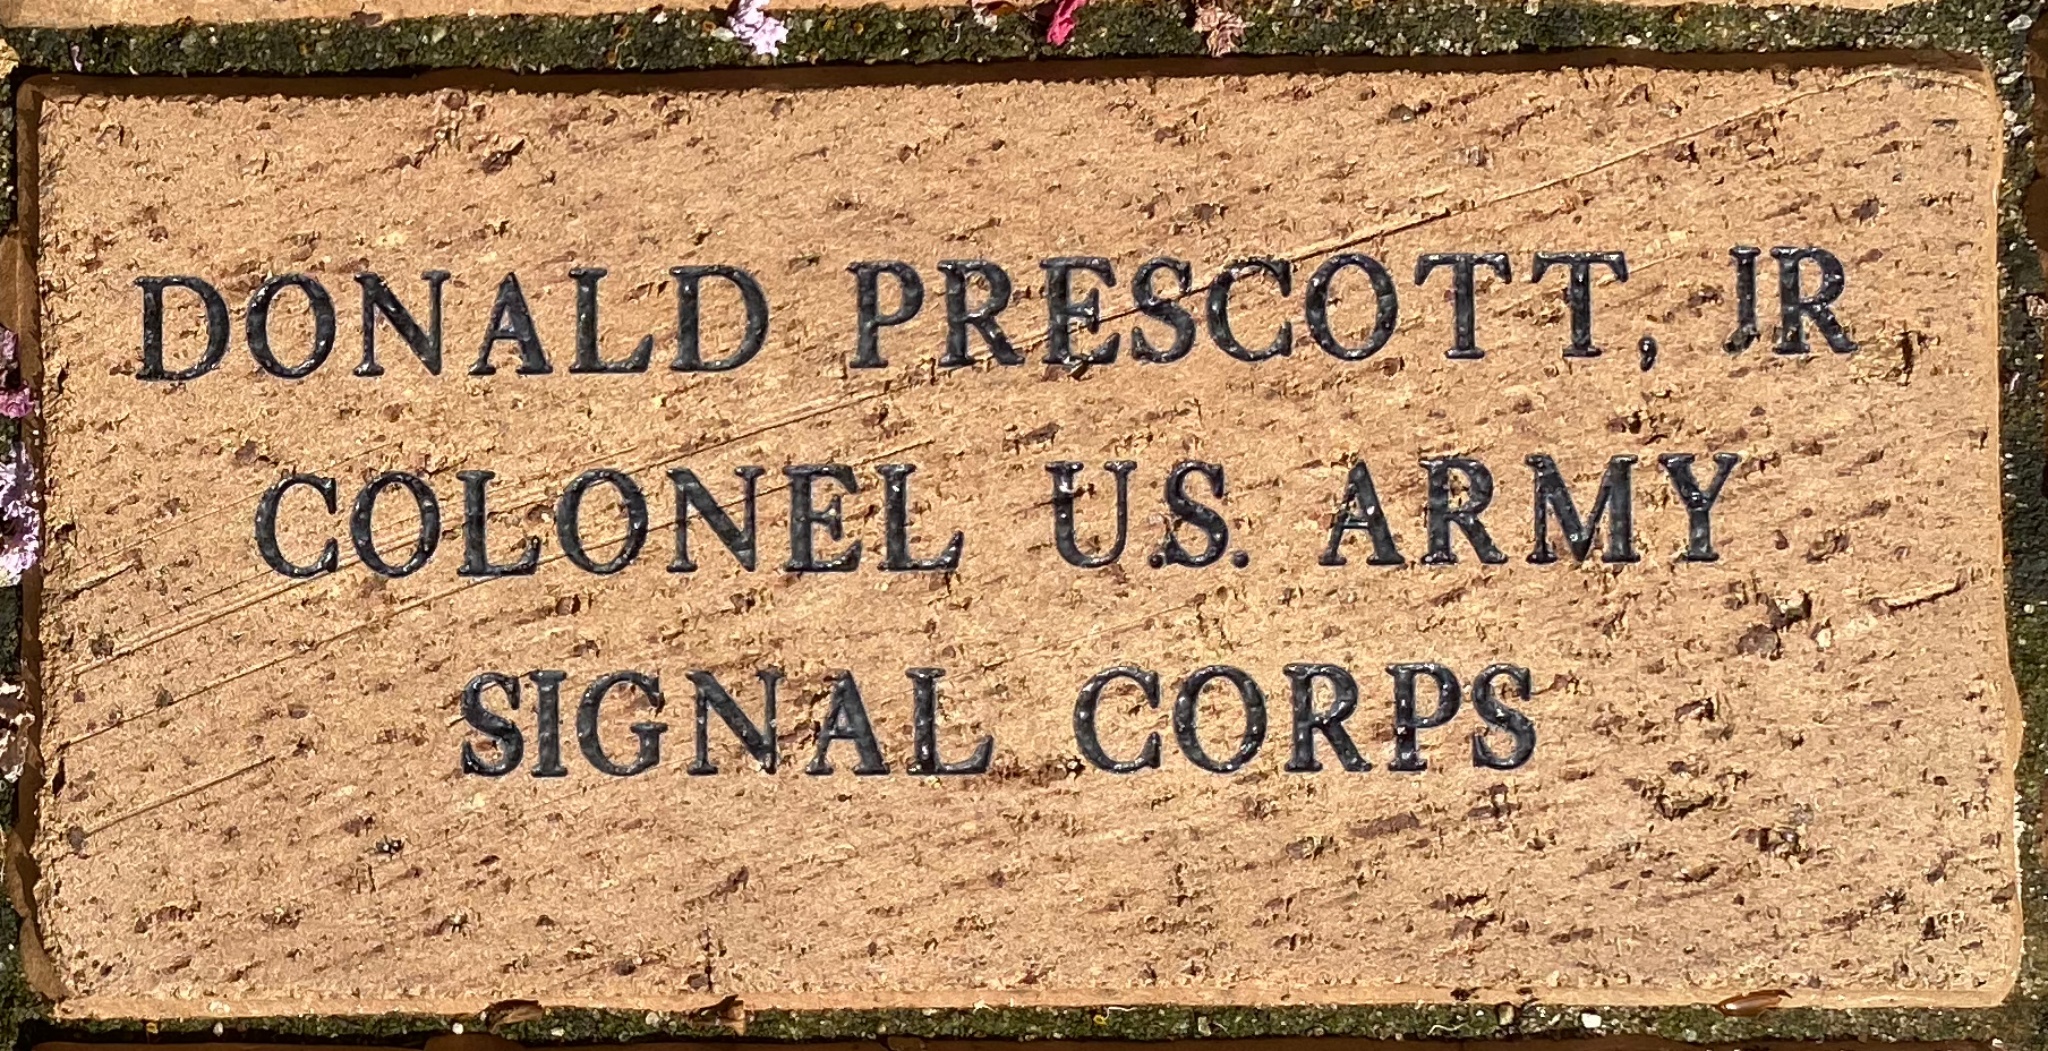 DONALD PRESCOTT, JR COLONEL U.S. ARMY SIGNAL CORPS